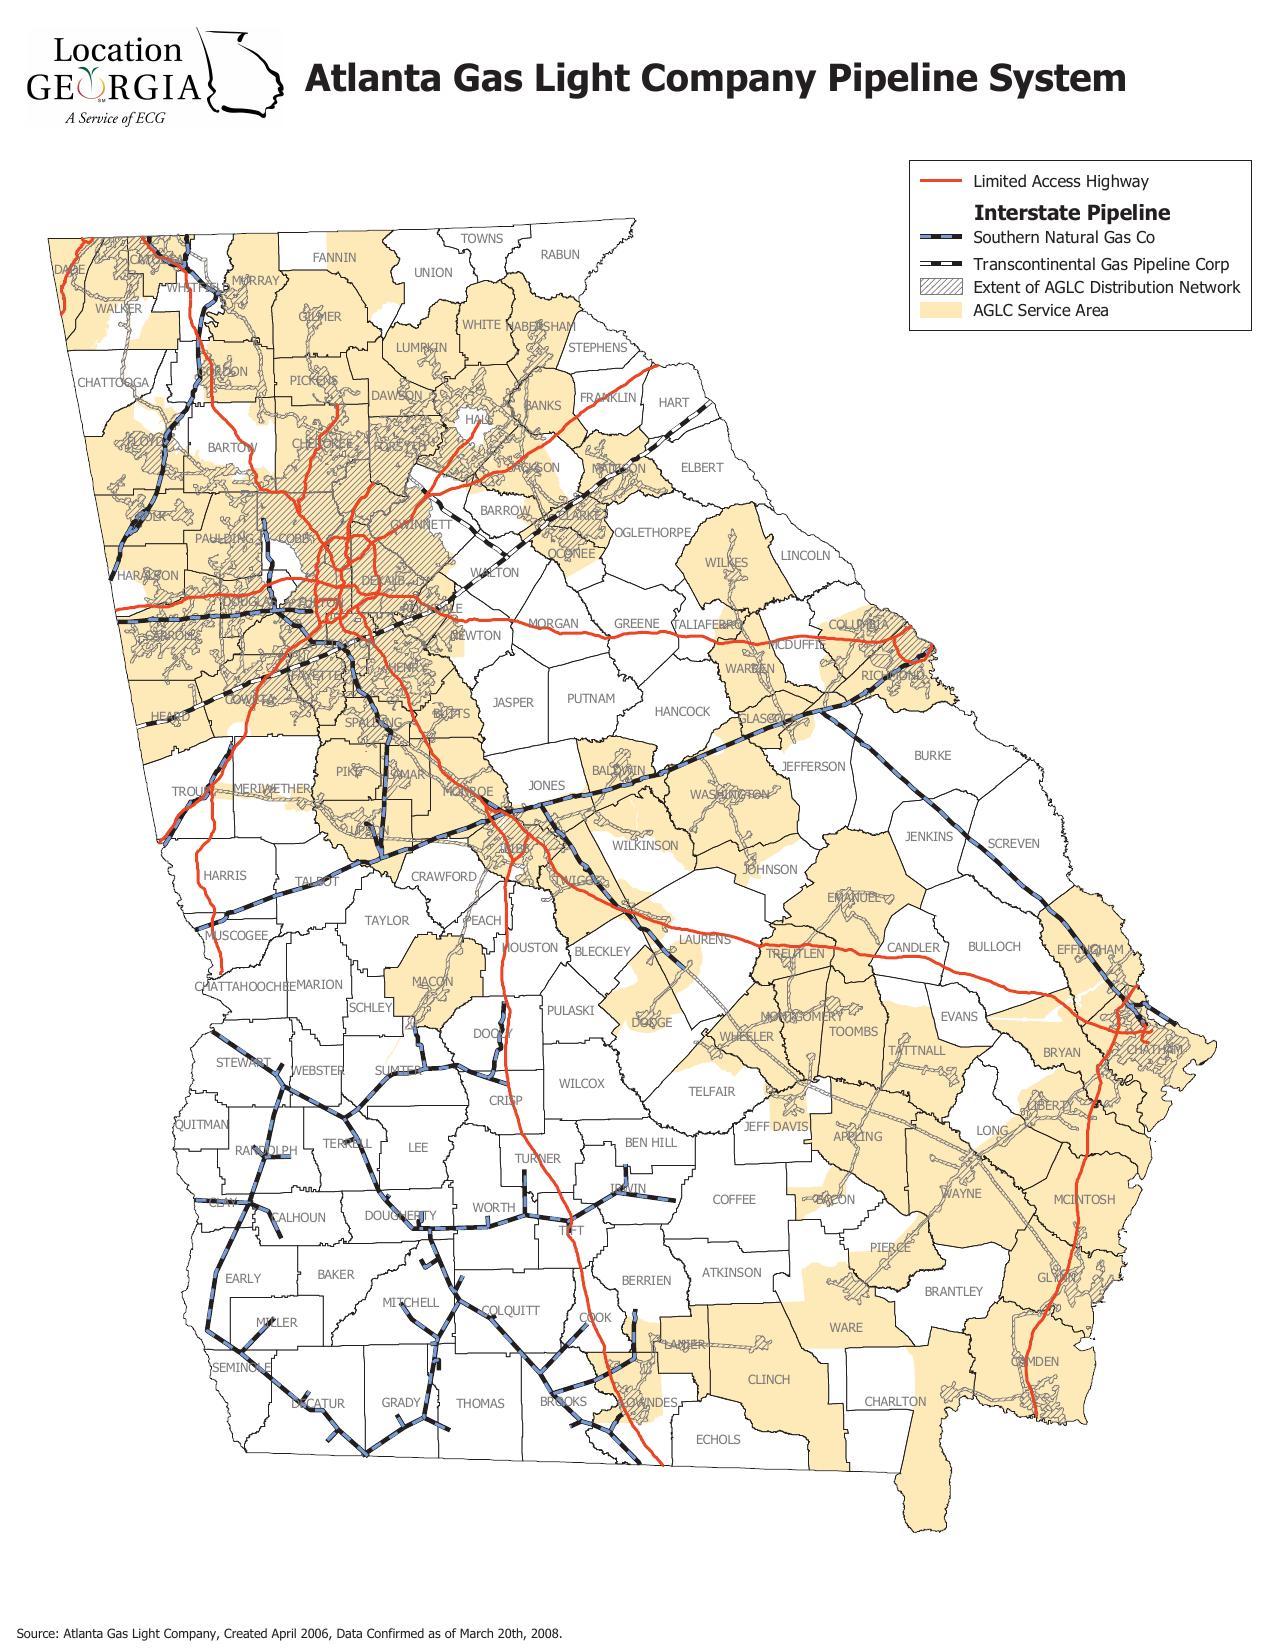 1275x1651 Georgia, AGL Map, in Homerville, GA pipeline explosion, by John S. Quarterman, 17 August 2018